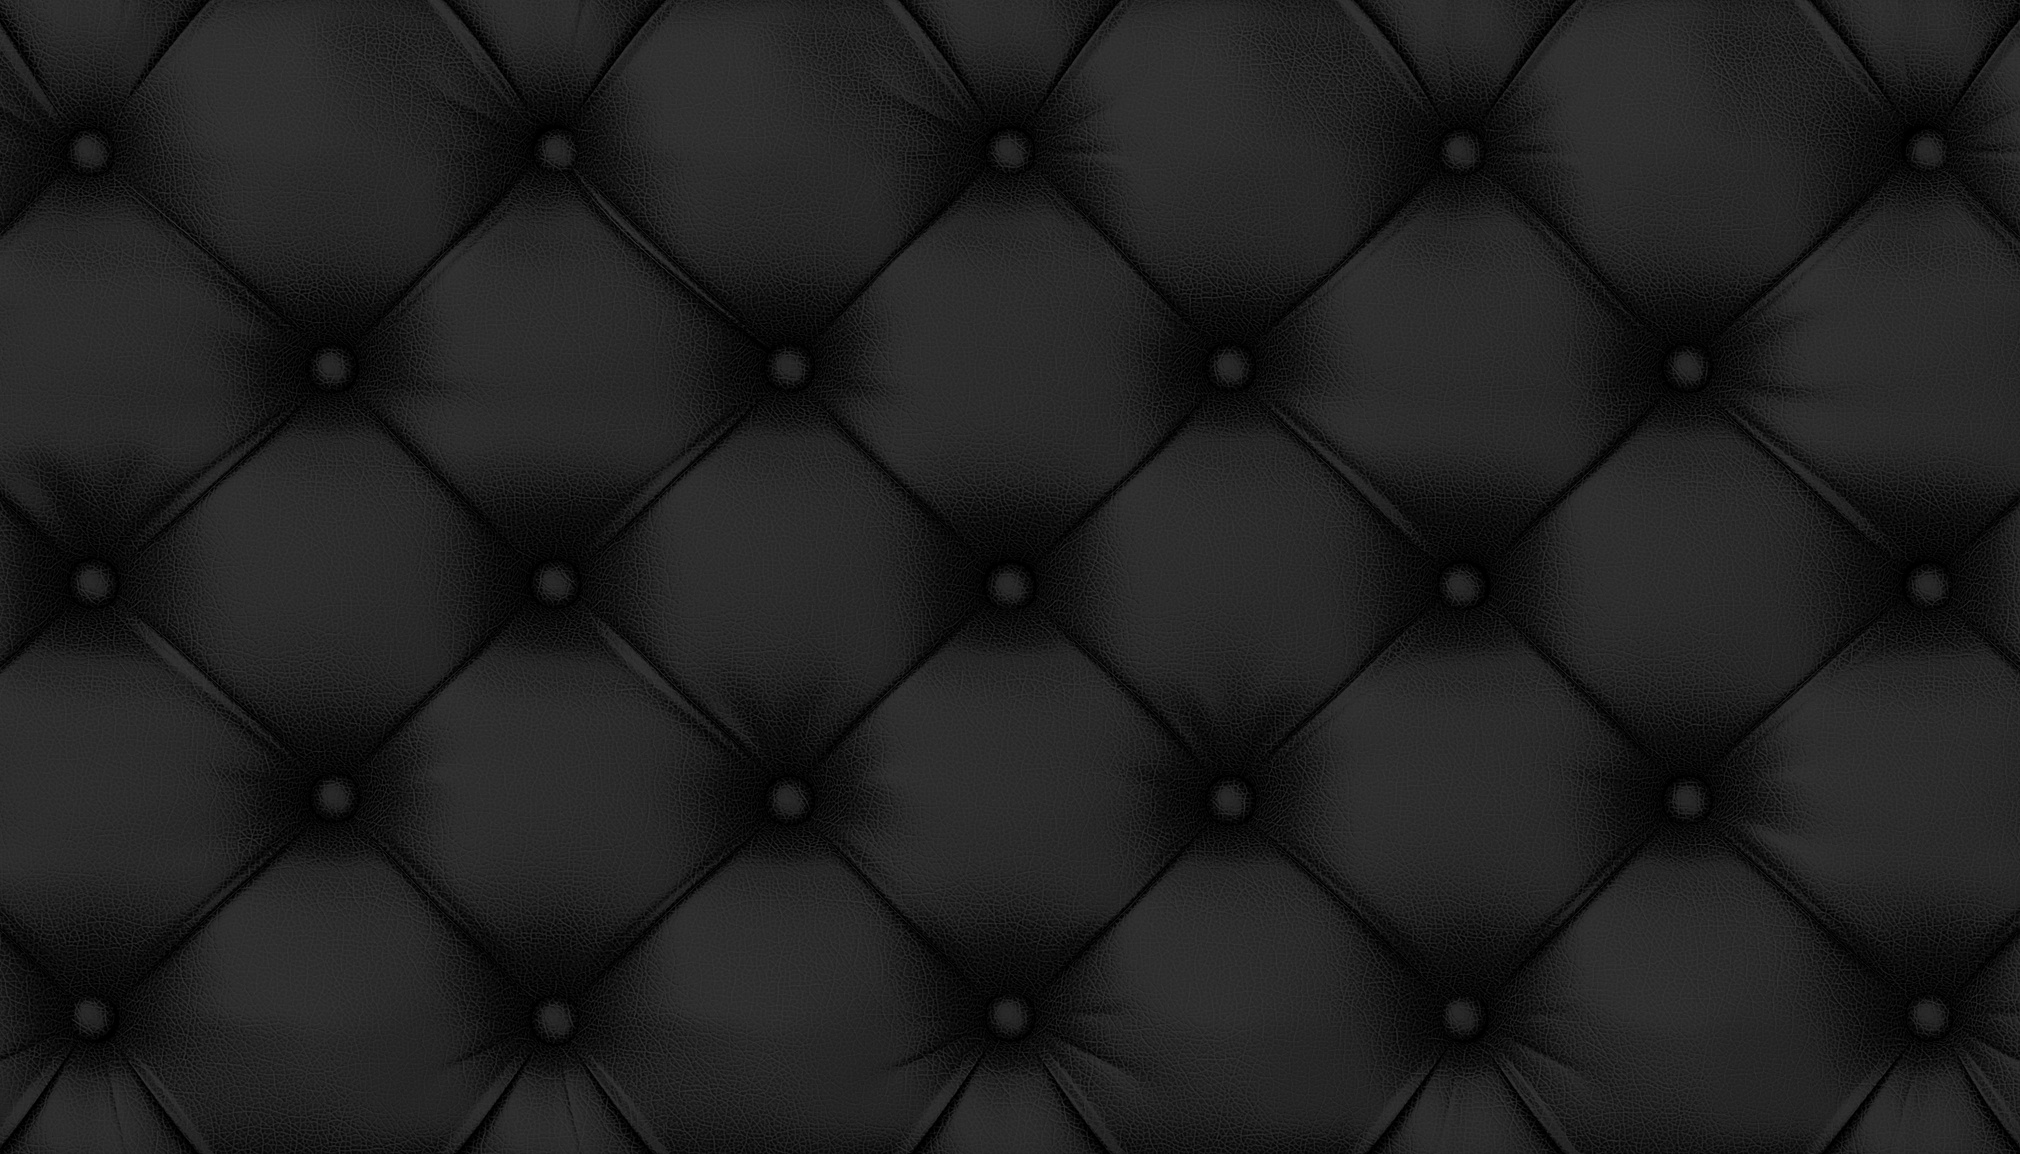 Tufted Black Leather Background